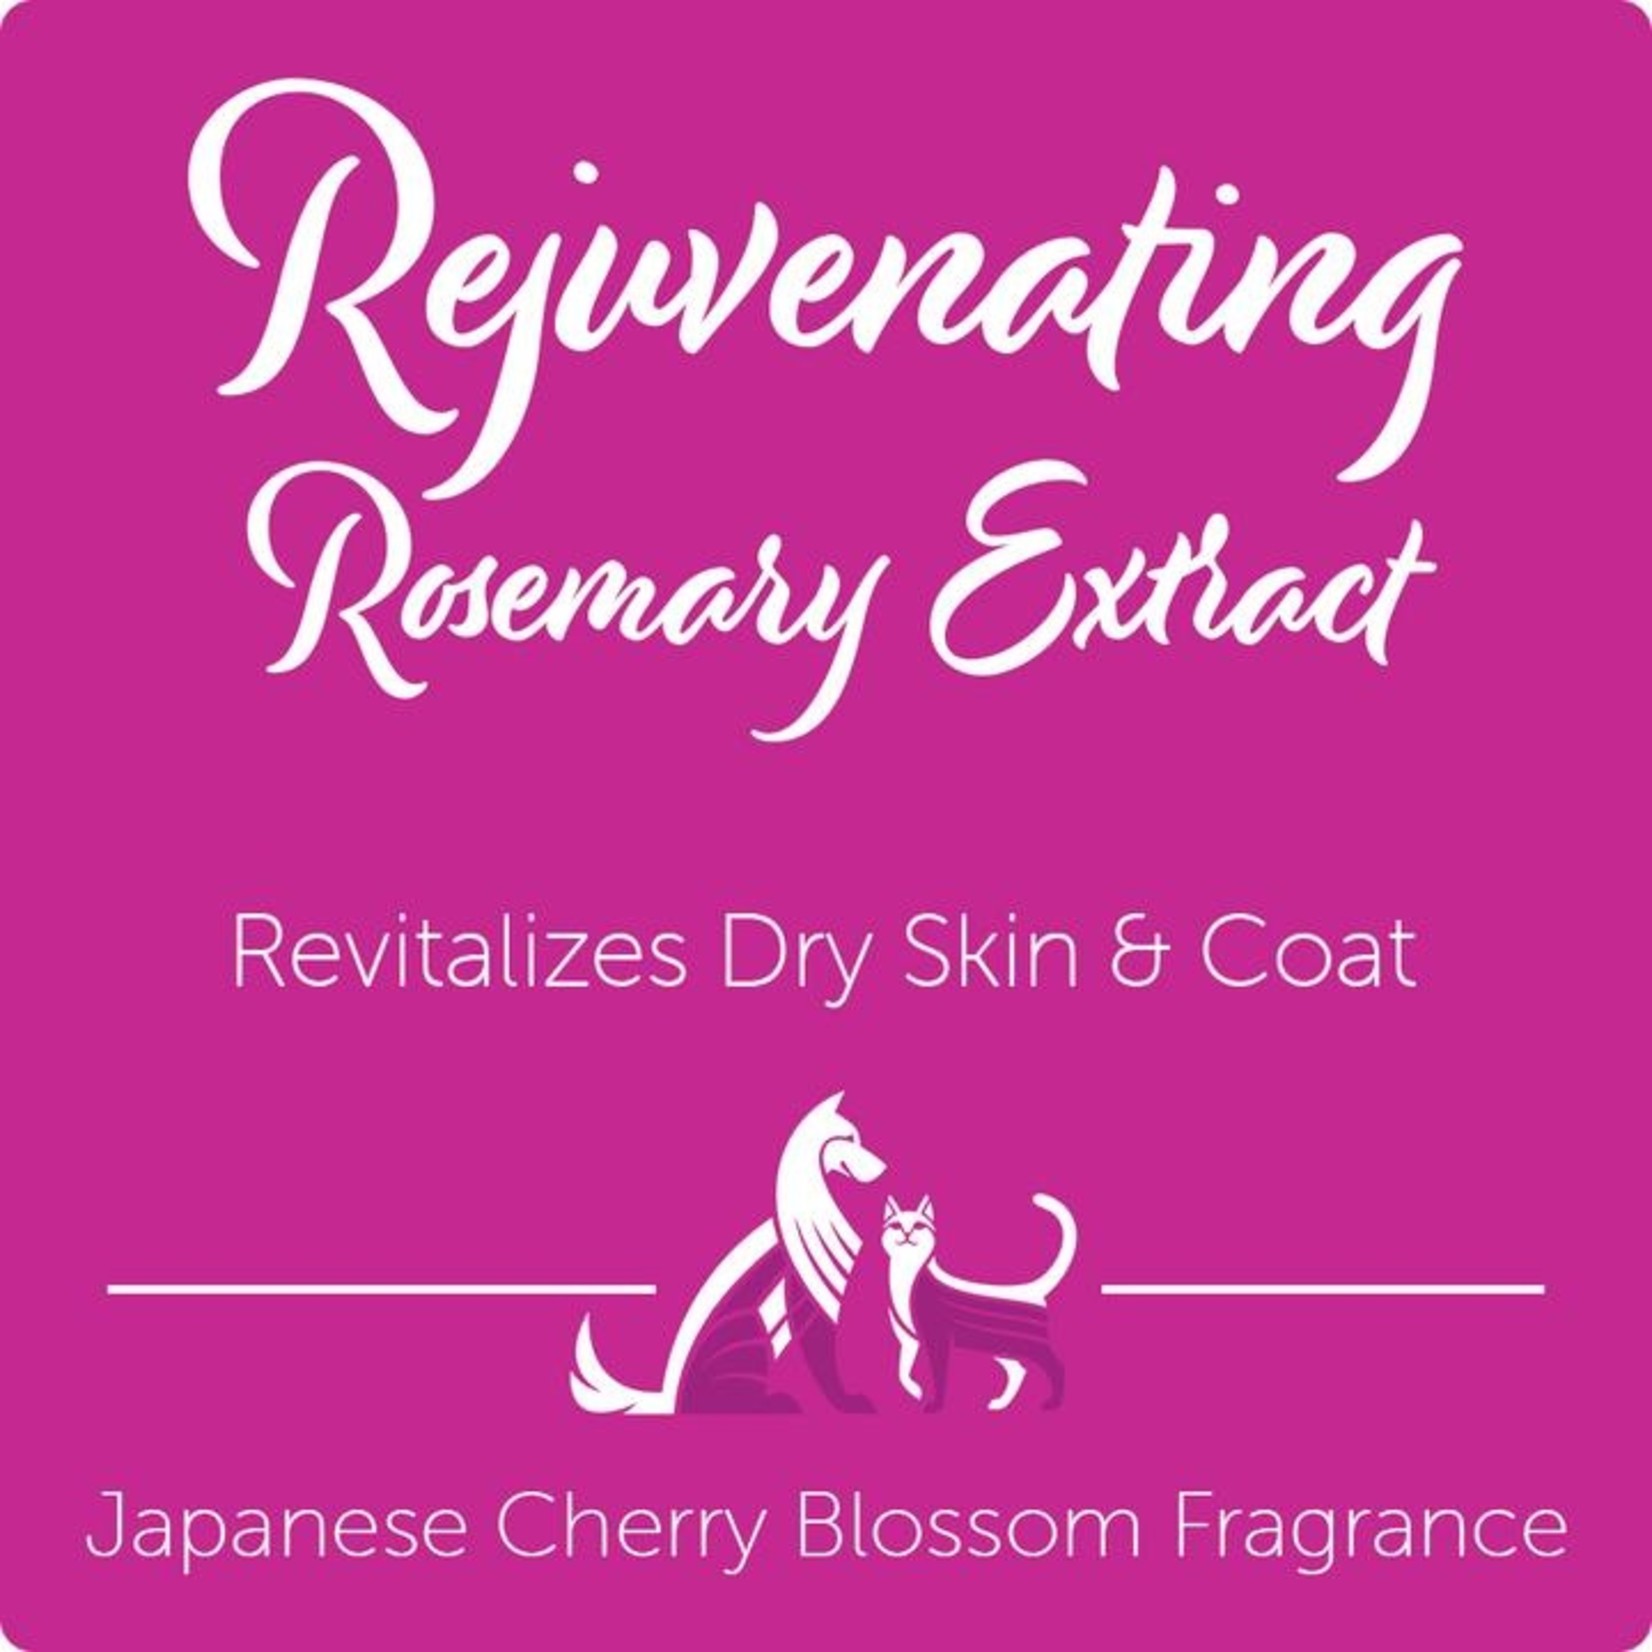 Noote Japanese Cherry Blossom Rejuvenating Rosemary Extract Pet Shampoo 16oz